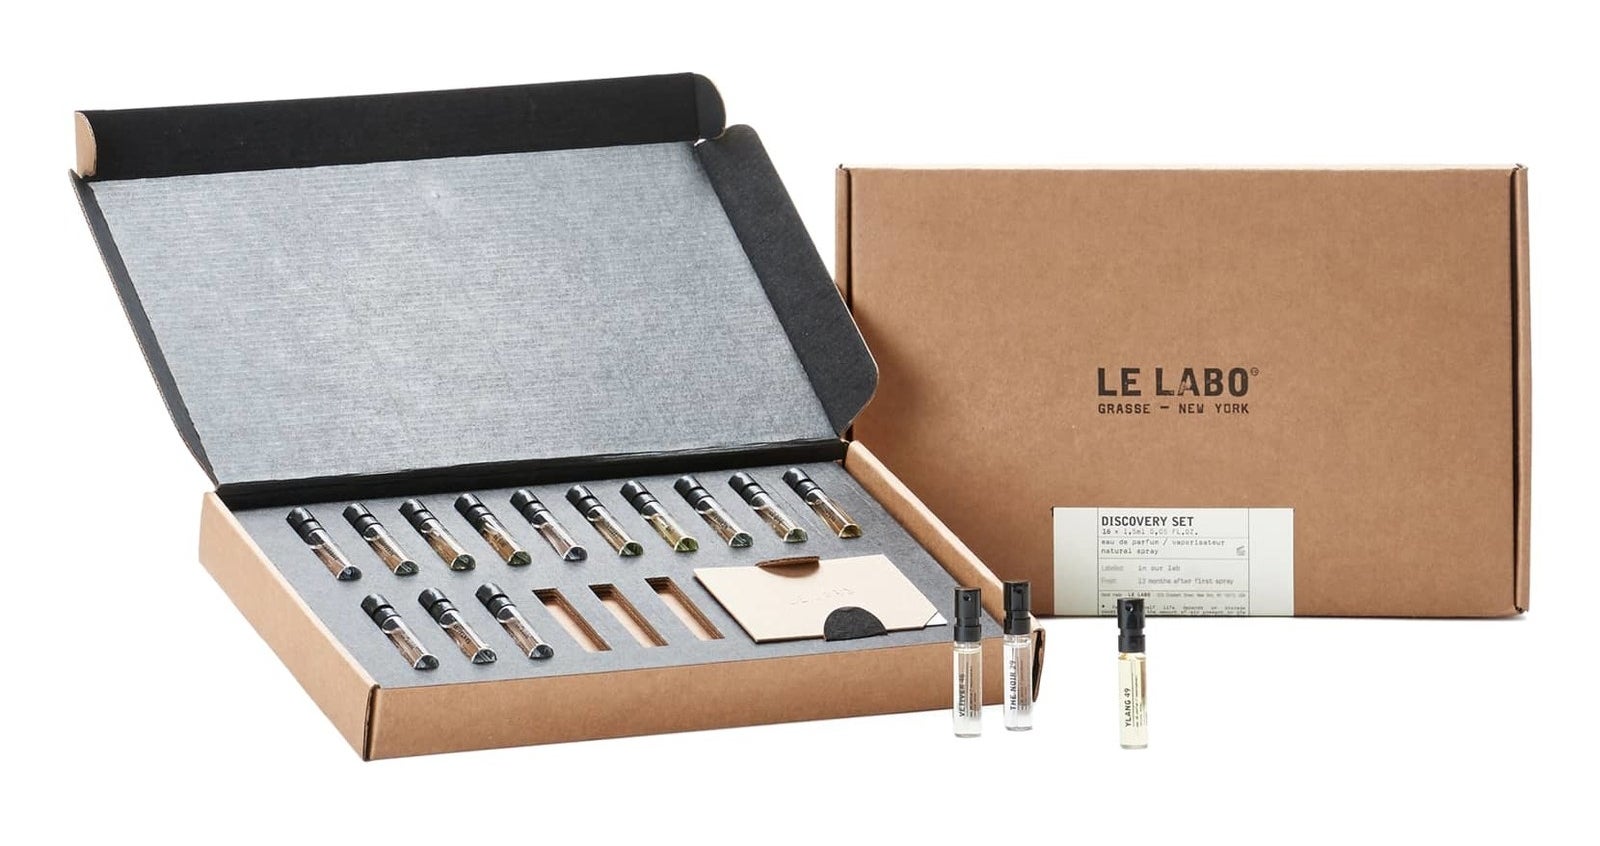 Discover set. Le Labo набор миниатюр. Fragrance Discovery Set. Le Labo подарочный набор. Набор collection Discovery Set.